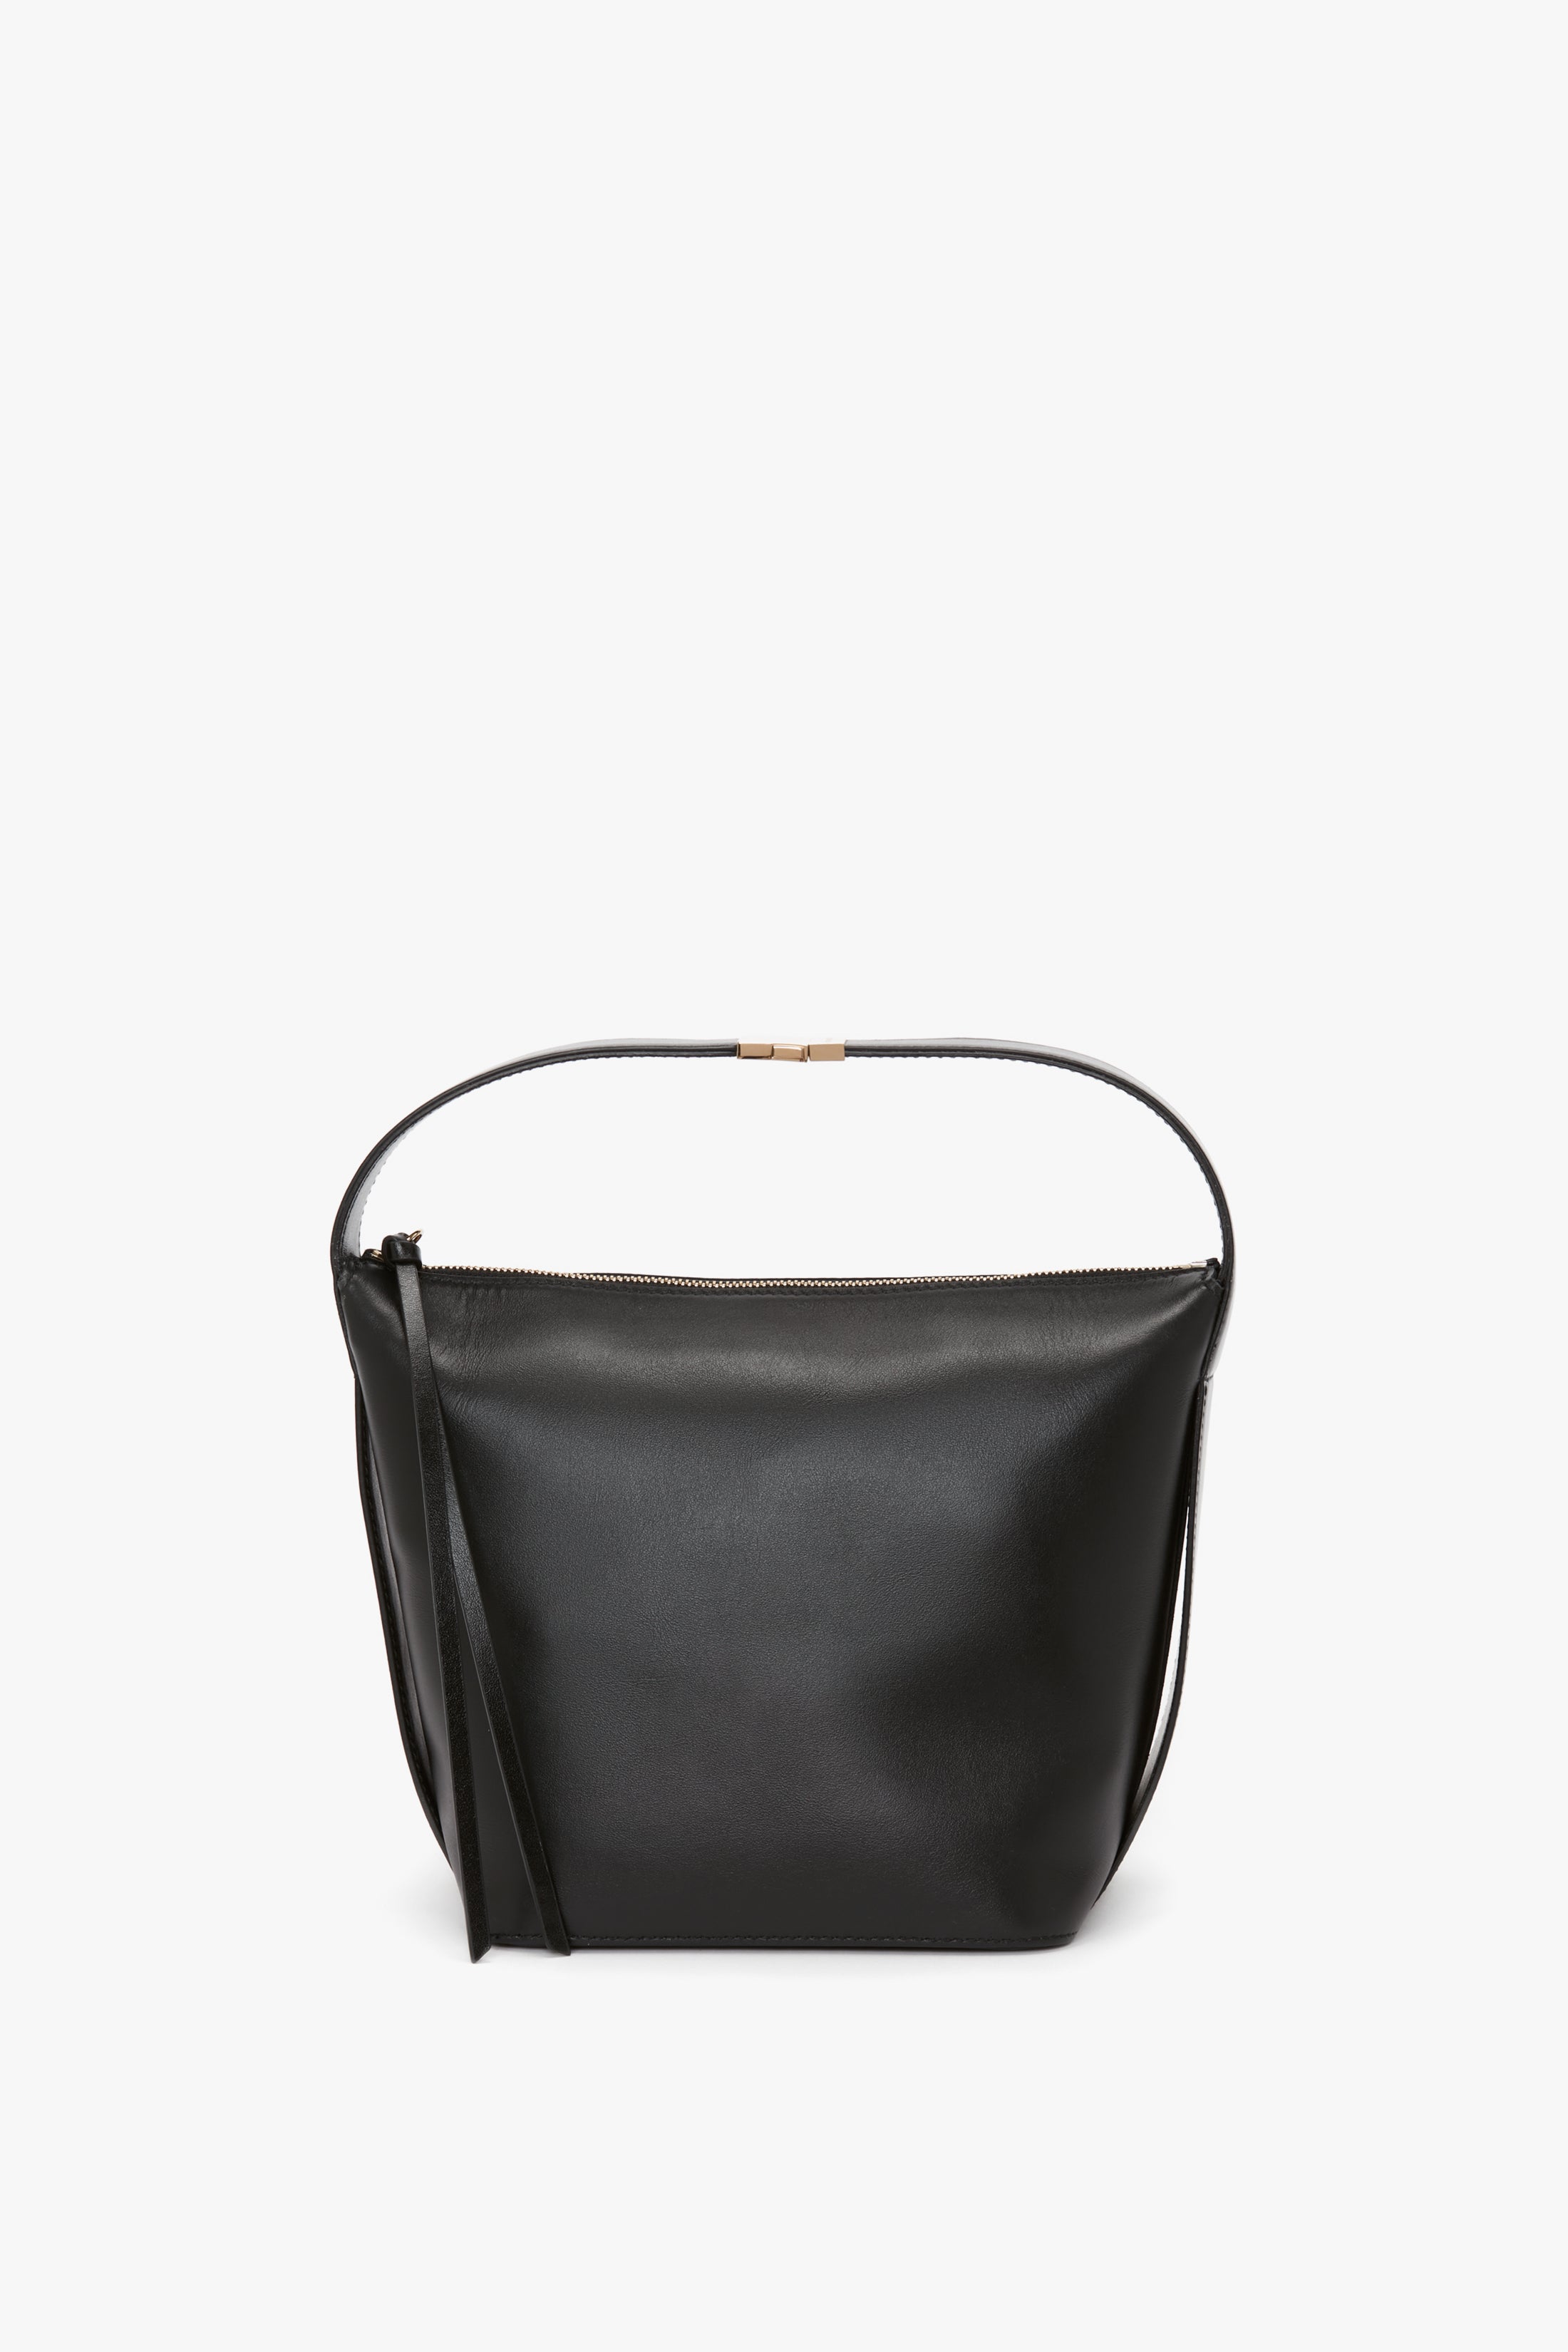 Victoria, Victoria Beckham Black Leather Medium Shoulder Bag